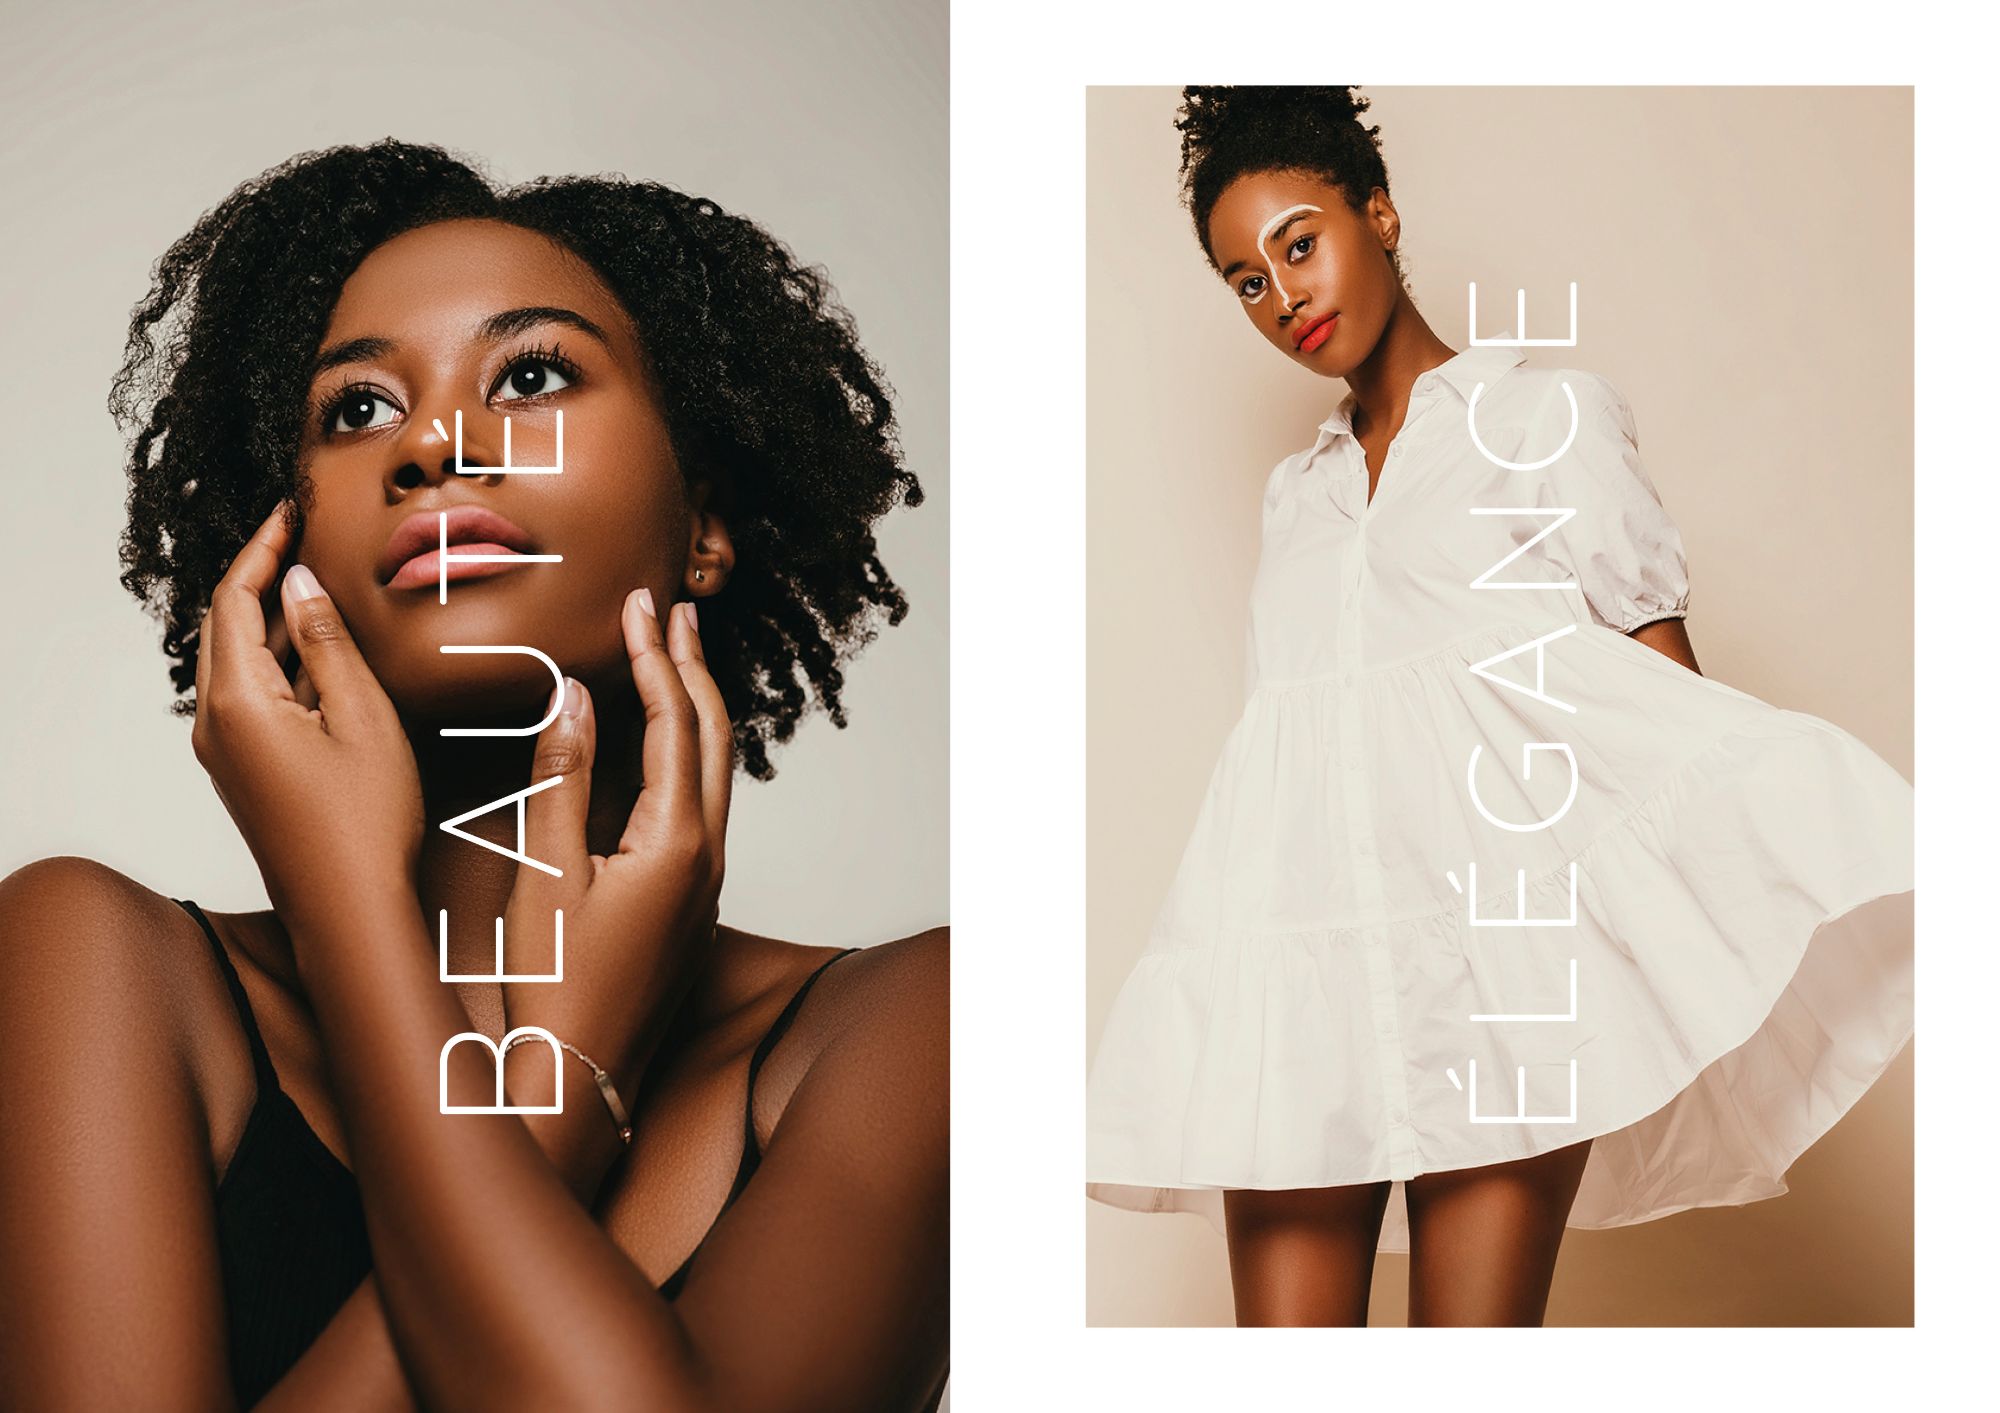 Black girl portrait white dress and typo 